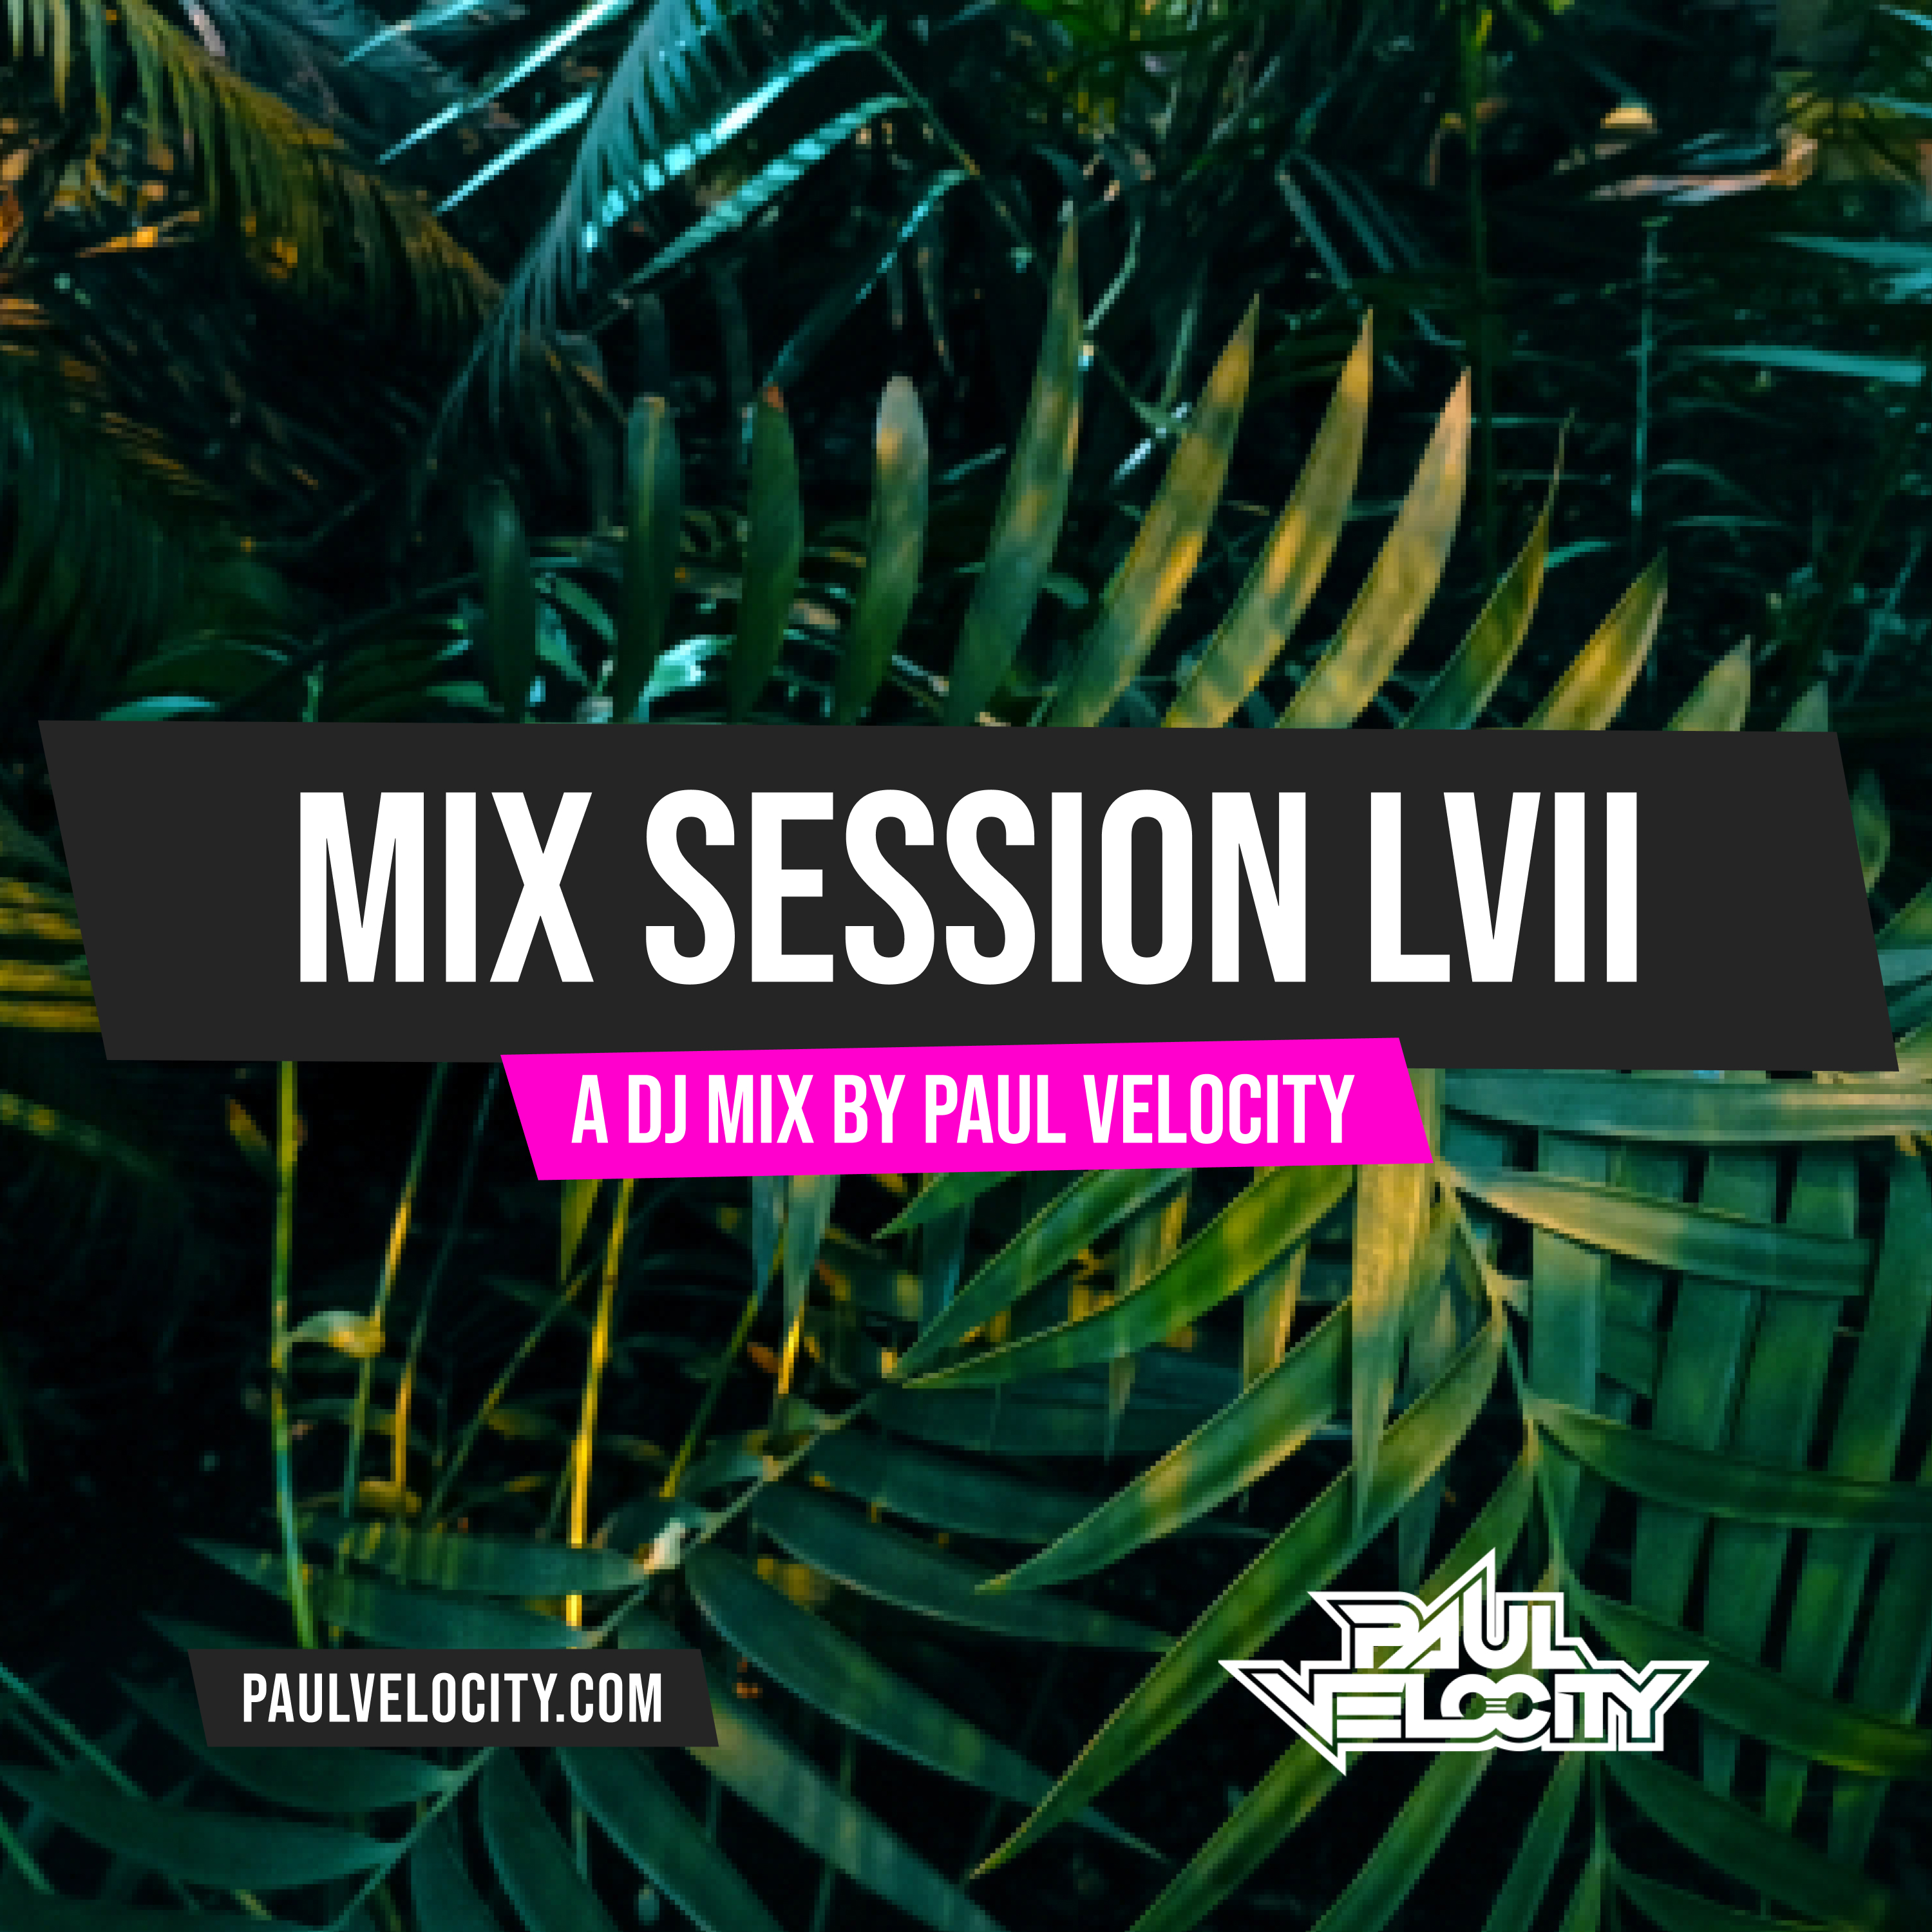 Mix Session LVII